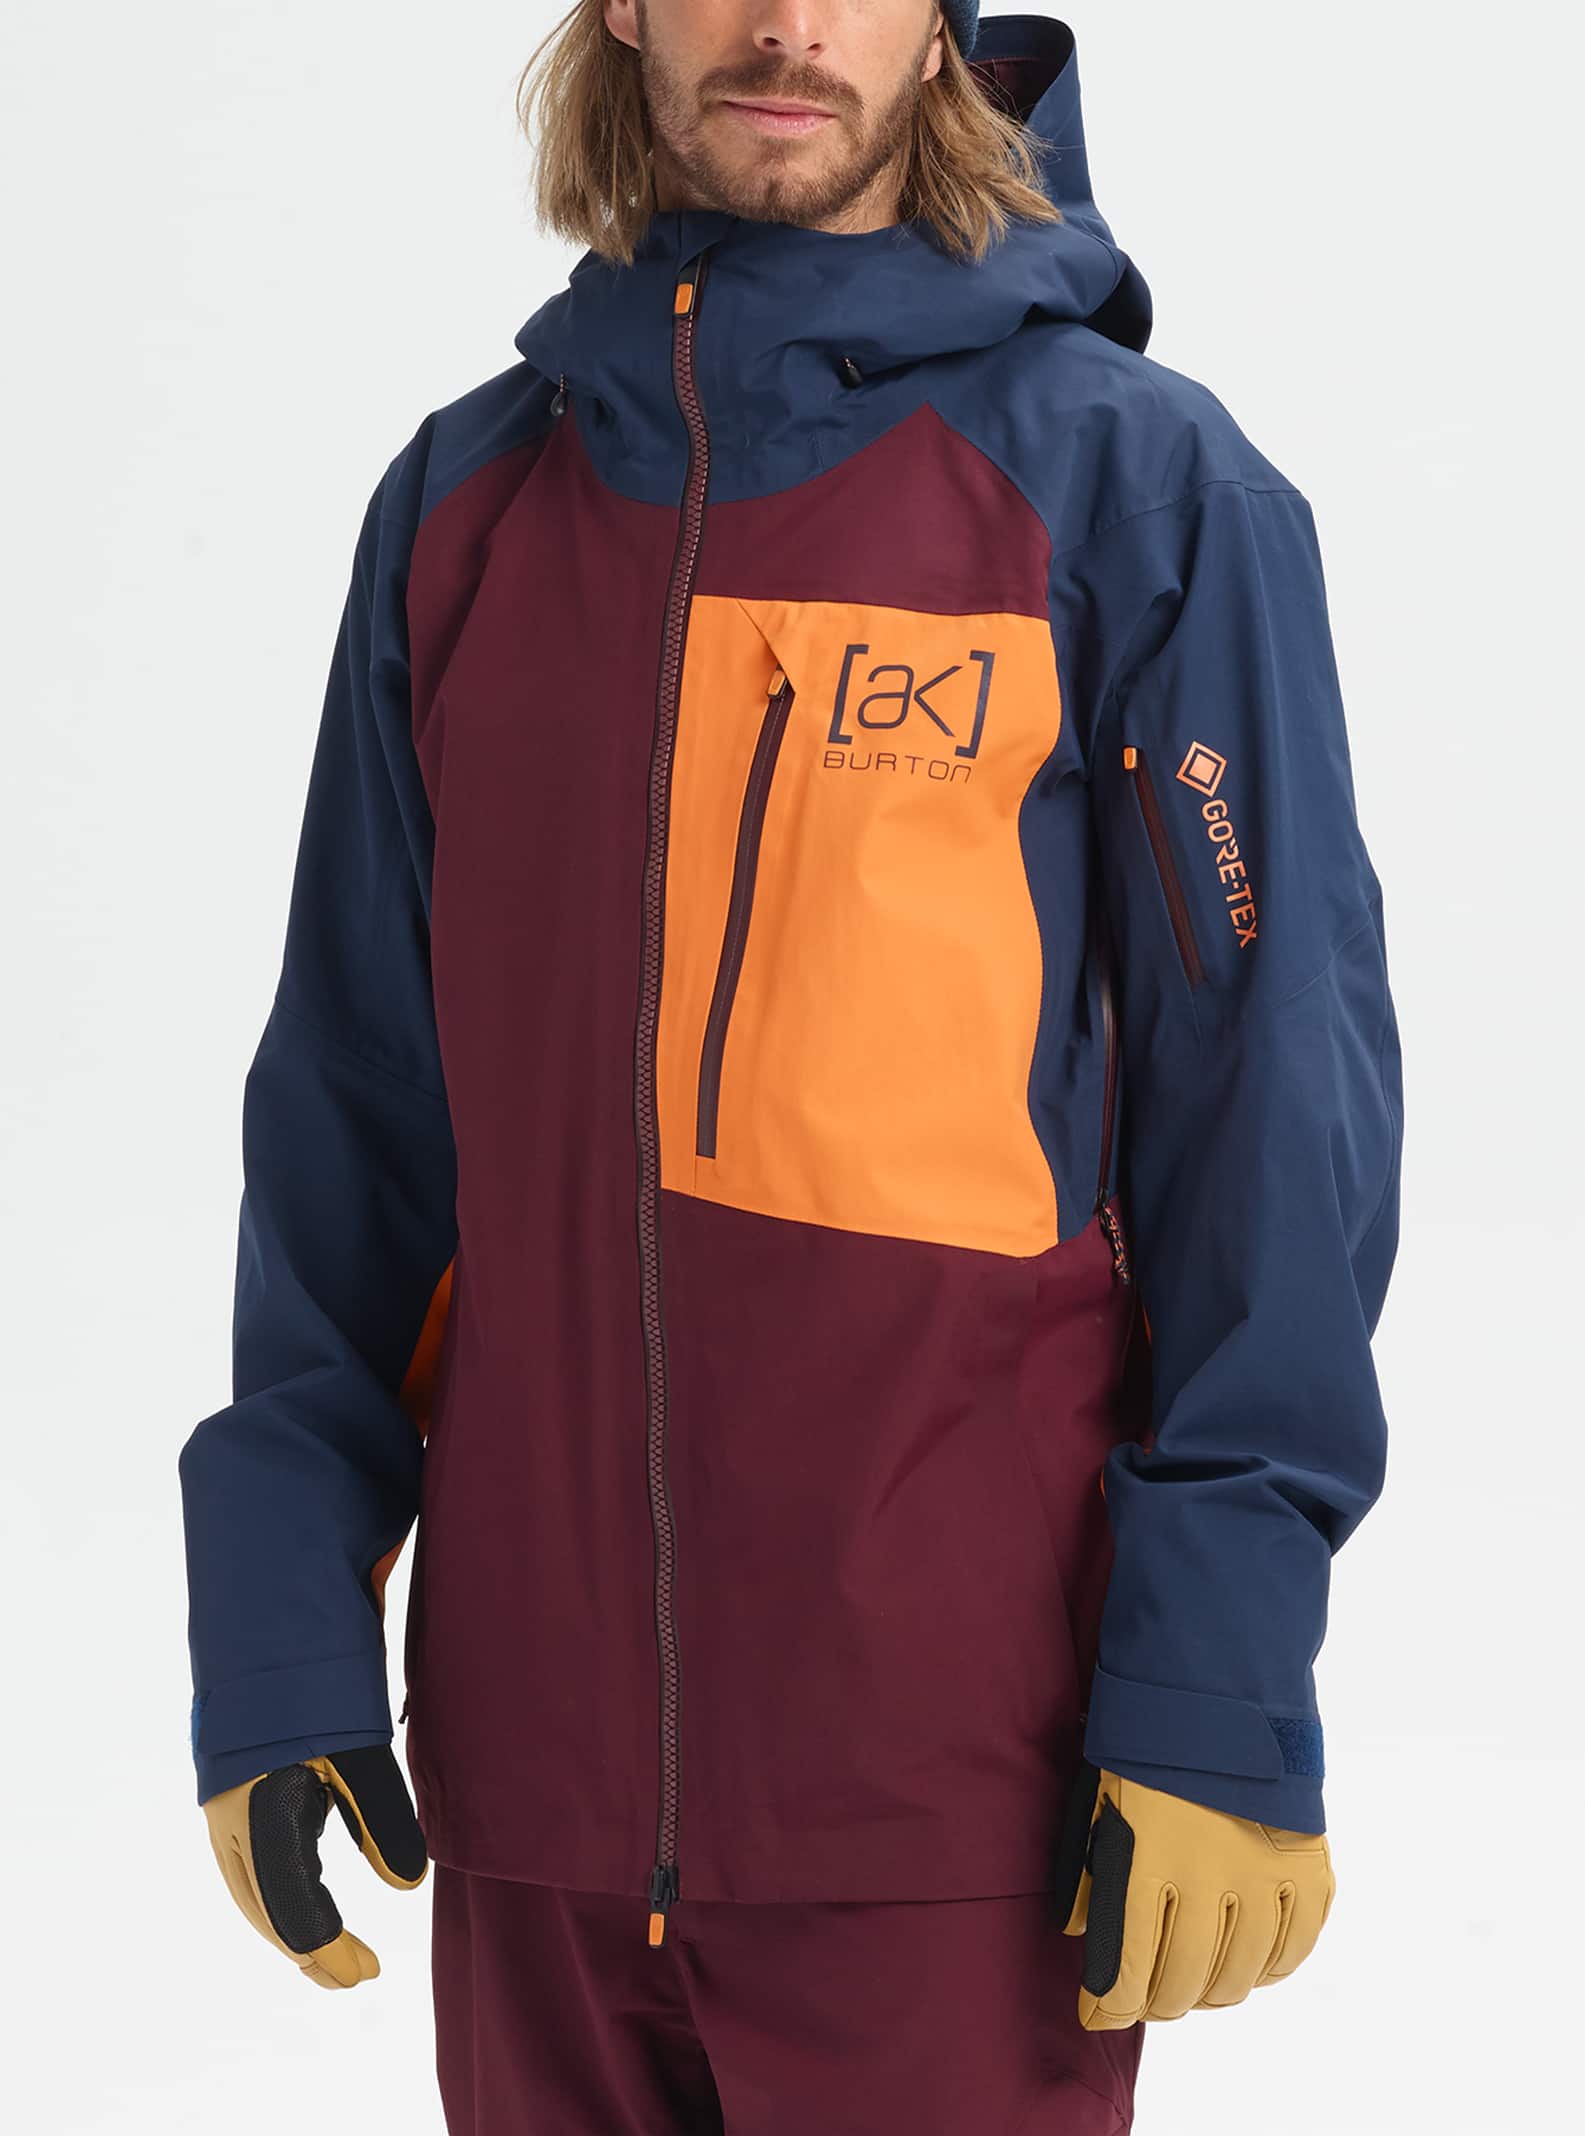 Burton GORE-TEX 2L Pillowline Jacket | evo